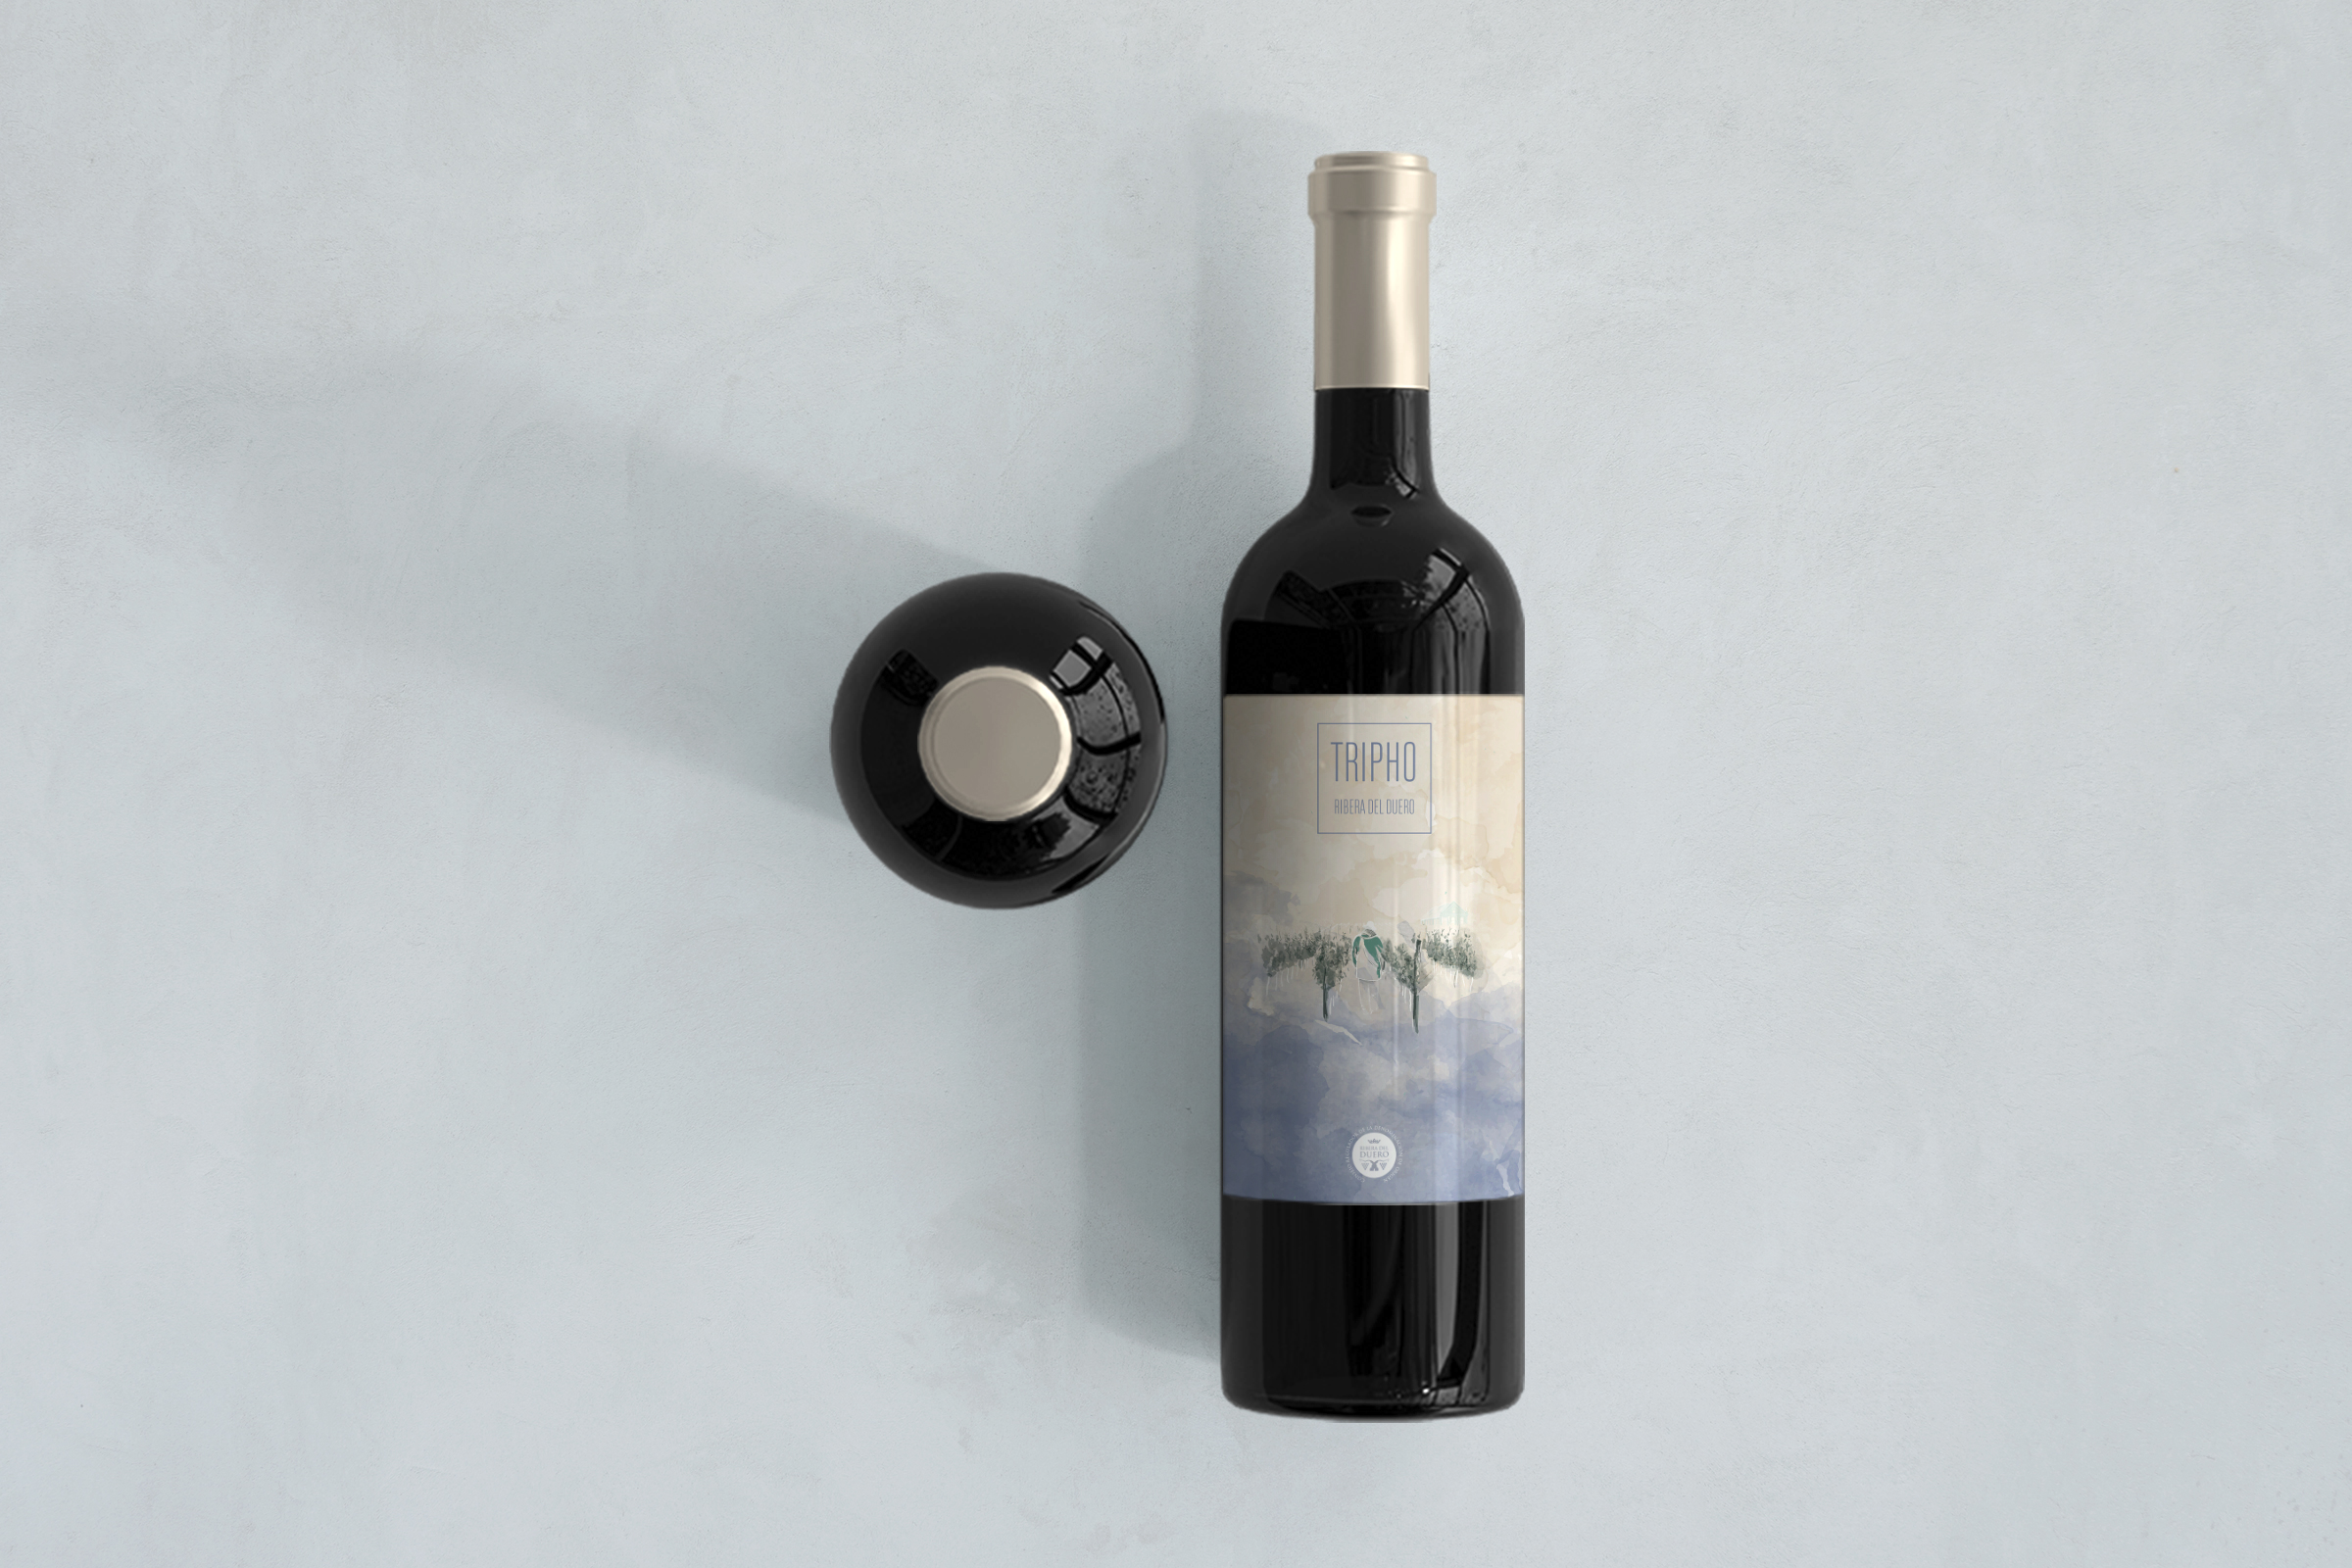 Diseño de etiqueta para botella de vino